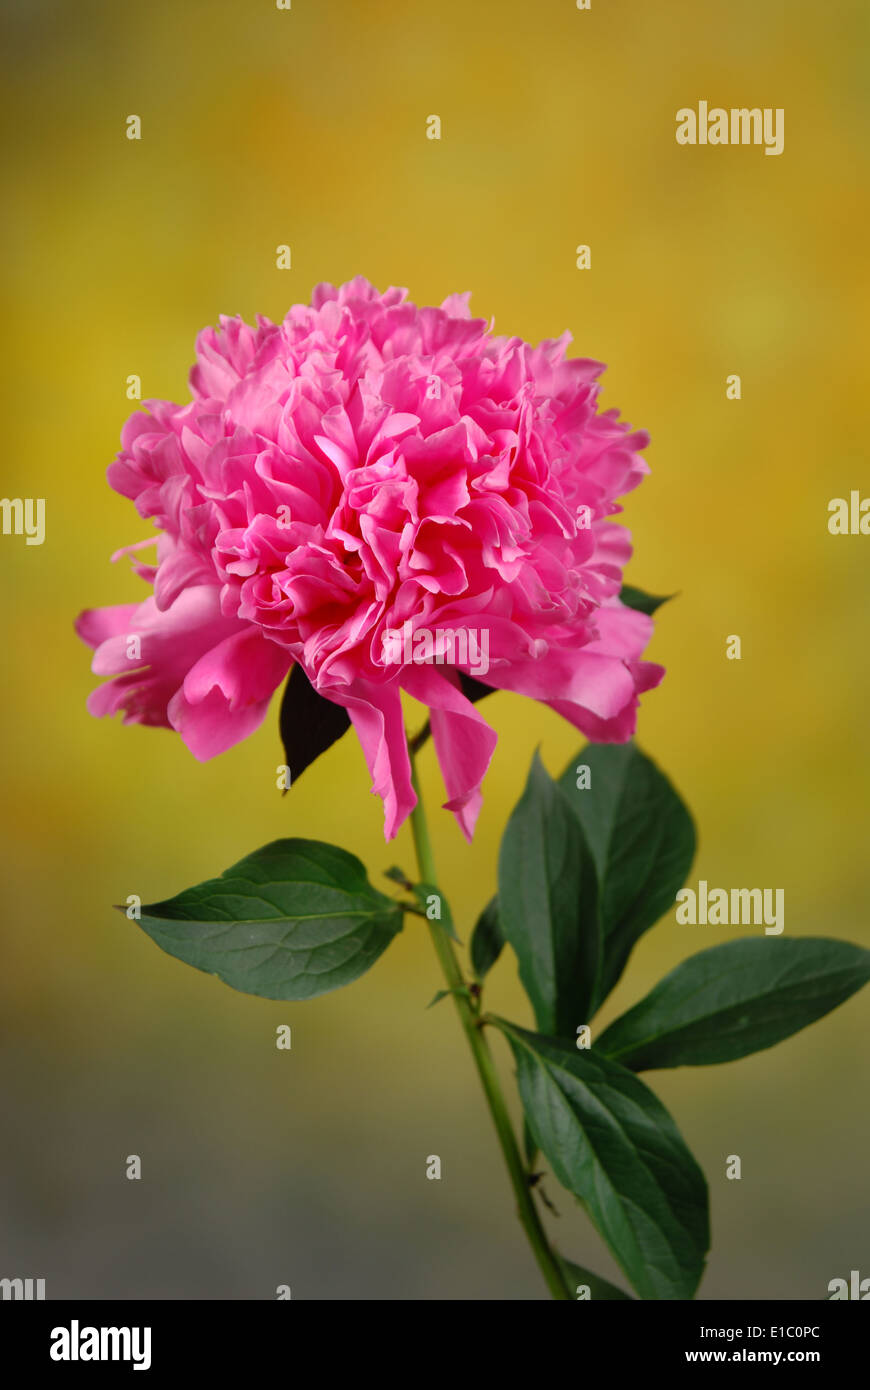 Rosa peonia unico fiore in close-up Foto Stock